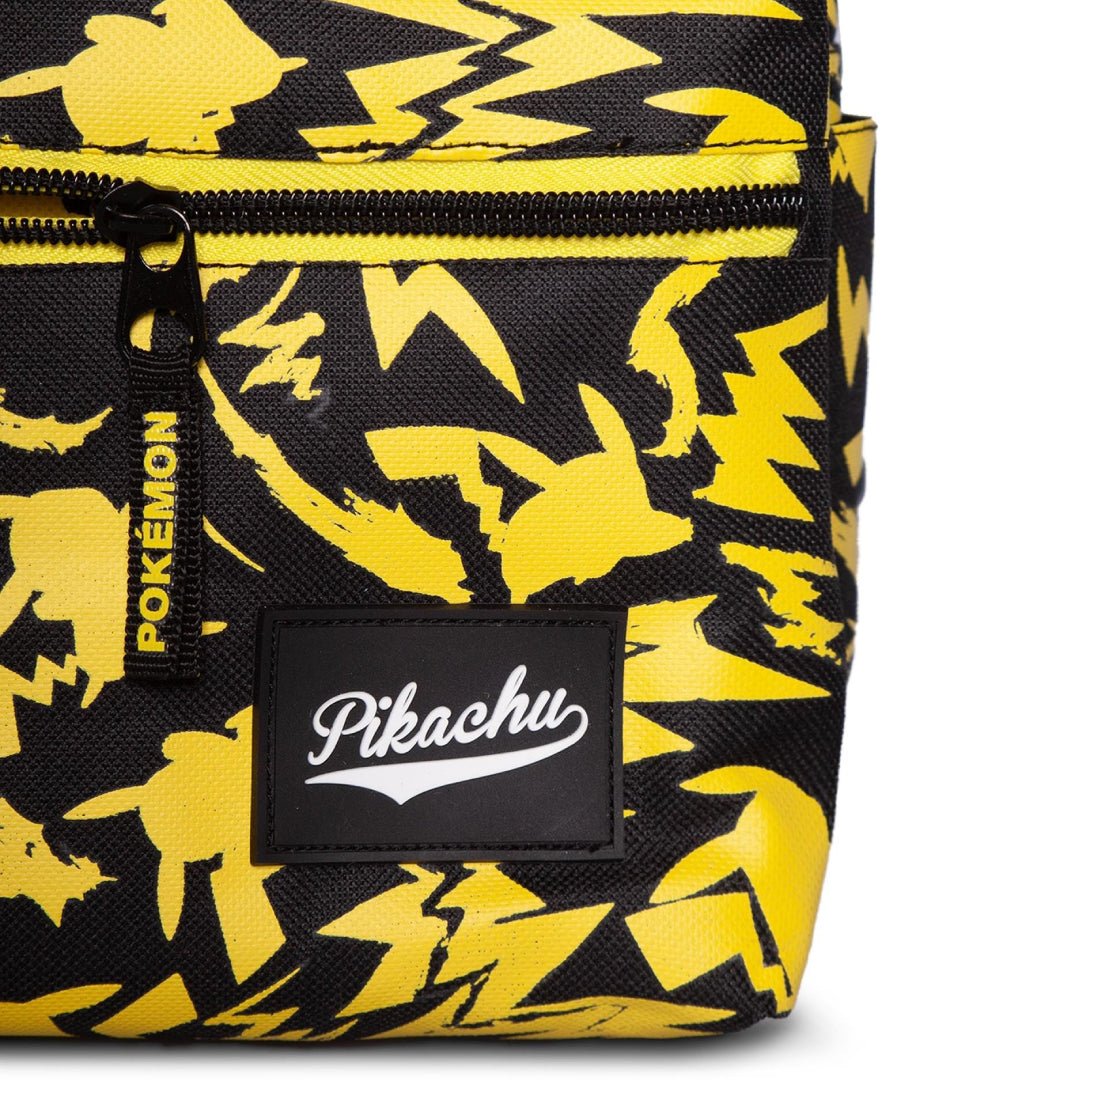 Difuzed Pokémon Backpack - Small Size - حقيبة ظهر - Store 974 | ستور ٩٧٤